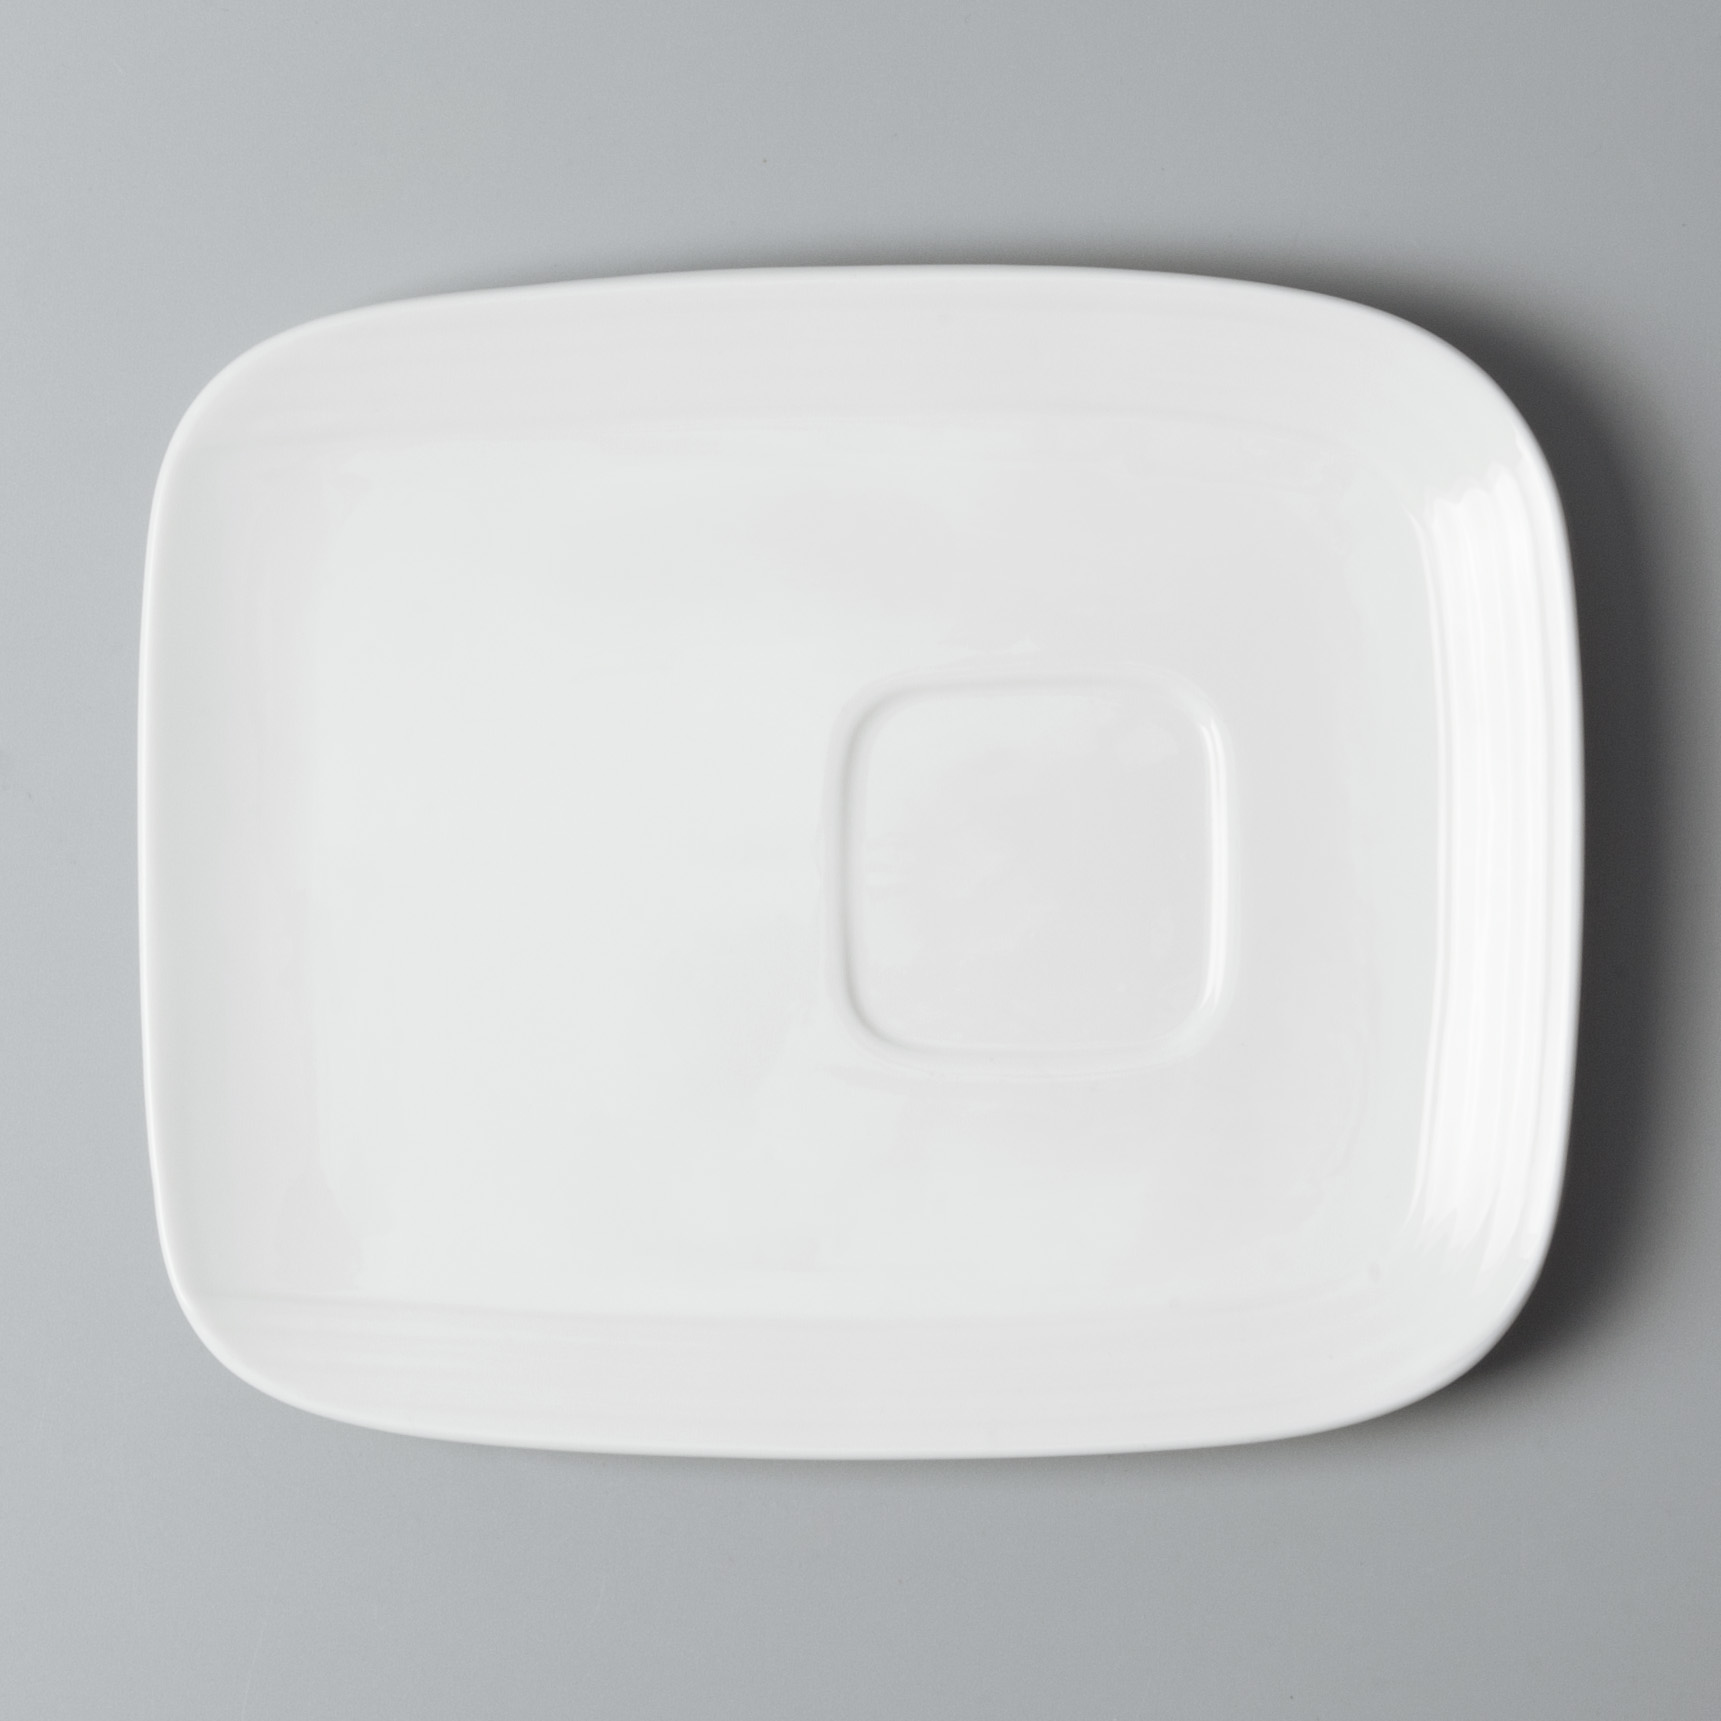 Two Eight irregular french white porcelain dinnerware series for hotel-4